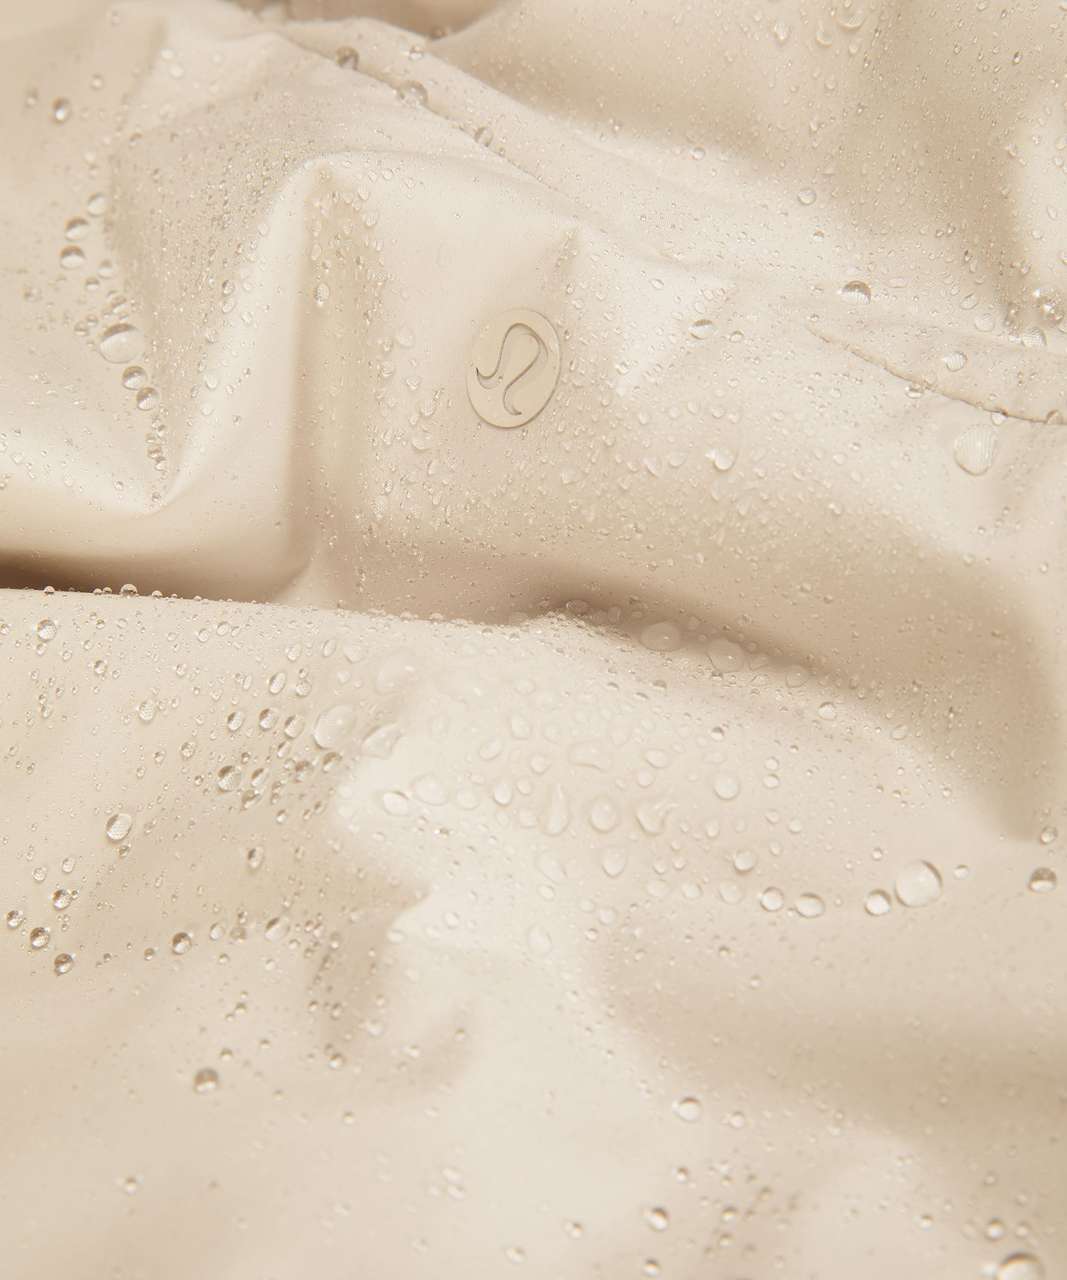 Lululemon SoftMatte Insulated Cropped Jacket - White Opal